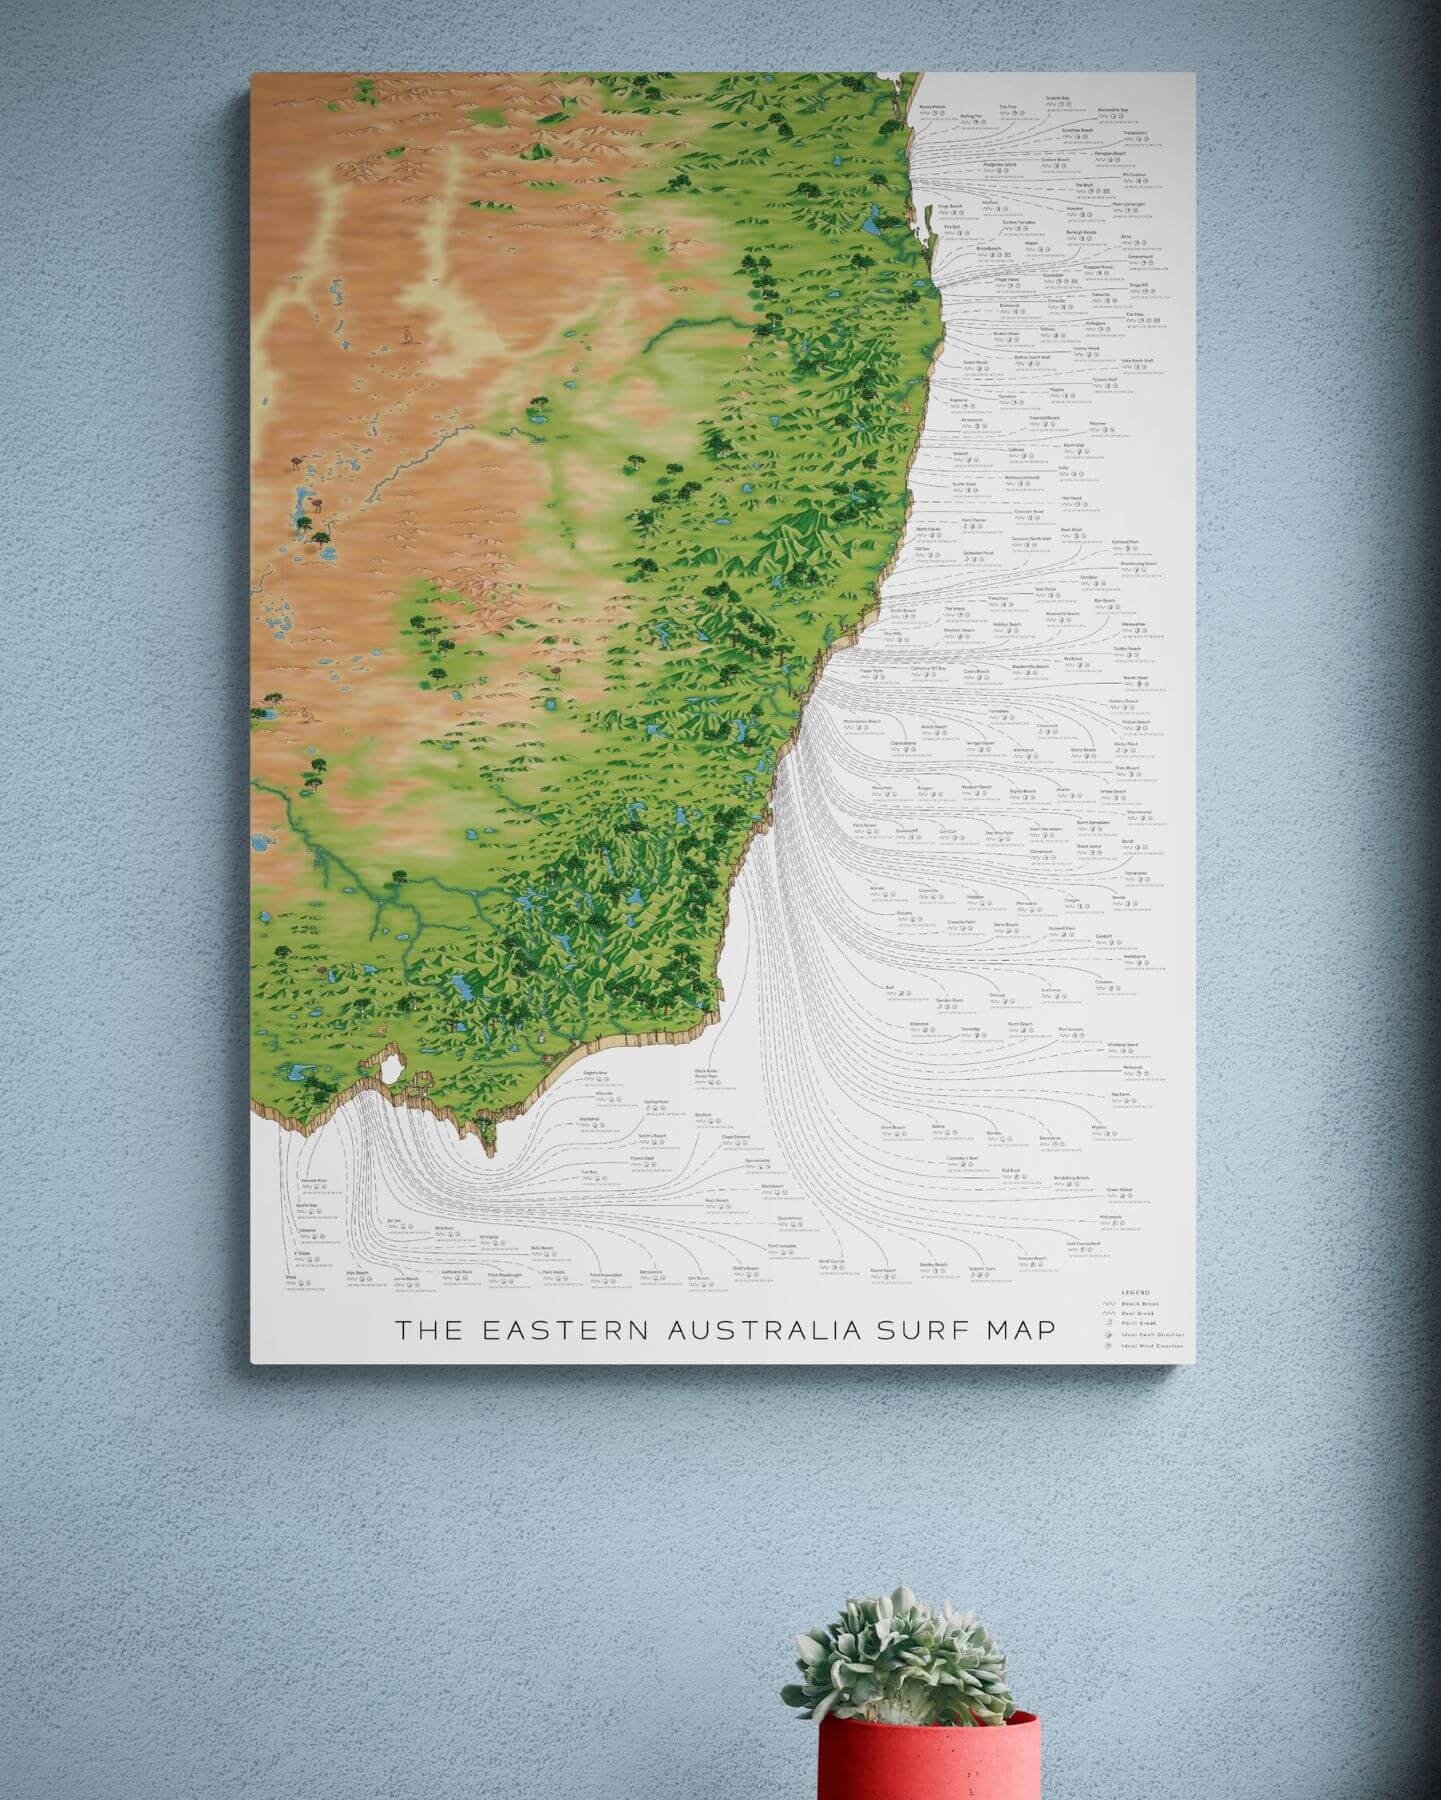 The Eastern Australia Surf Map